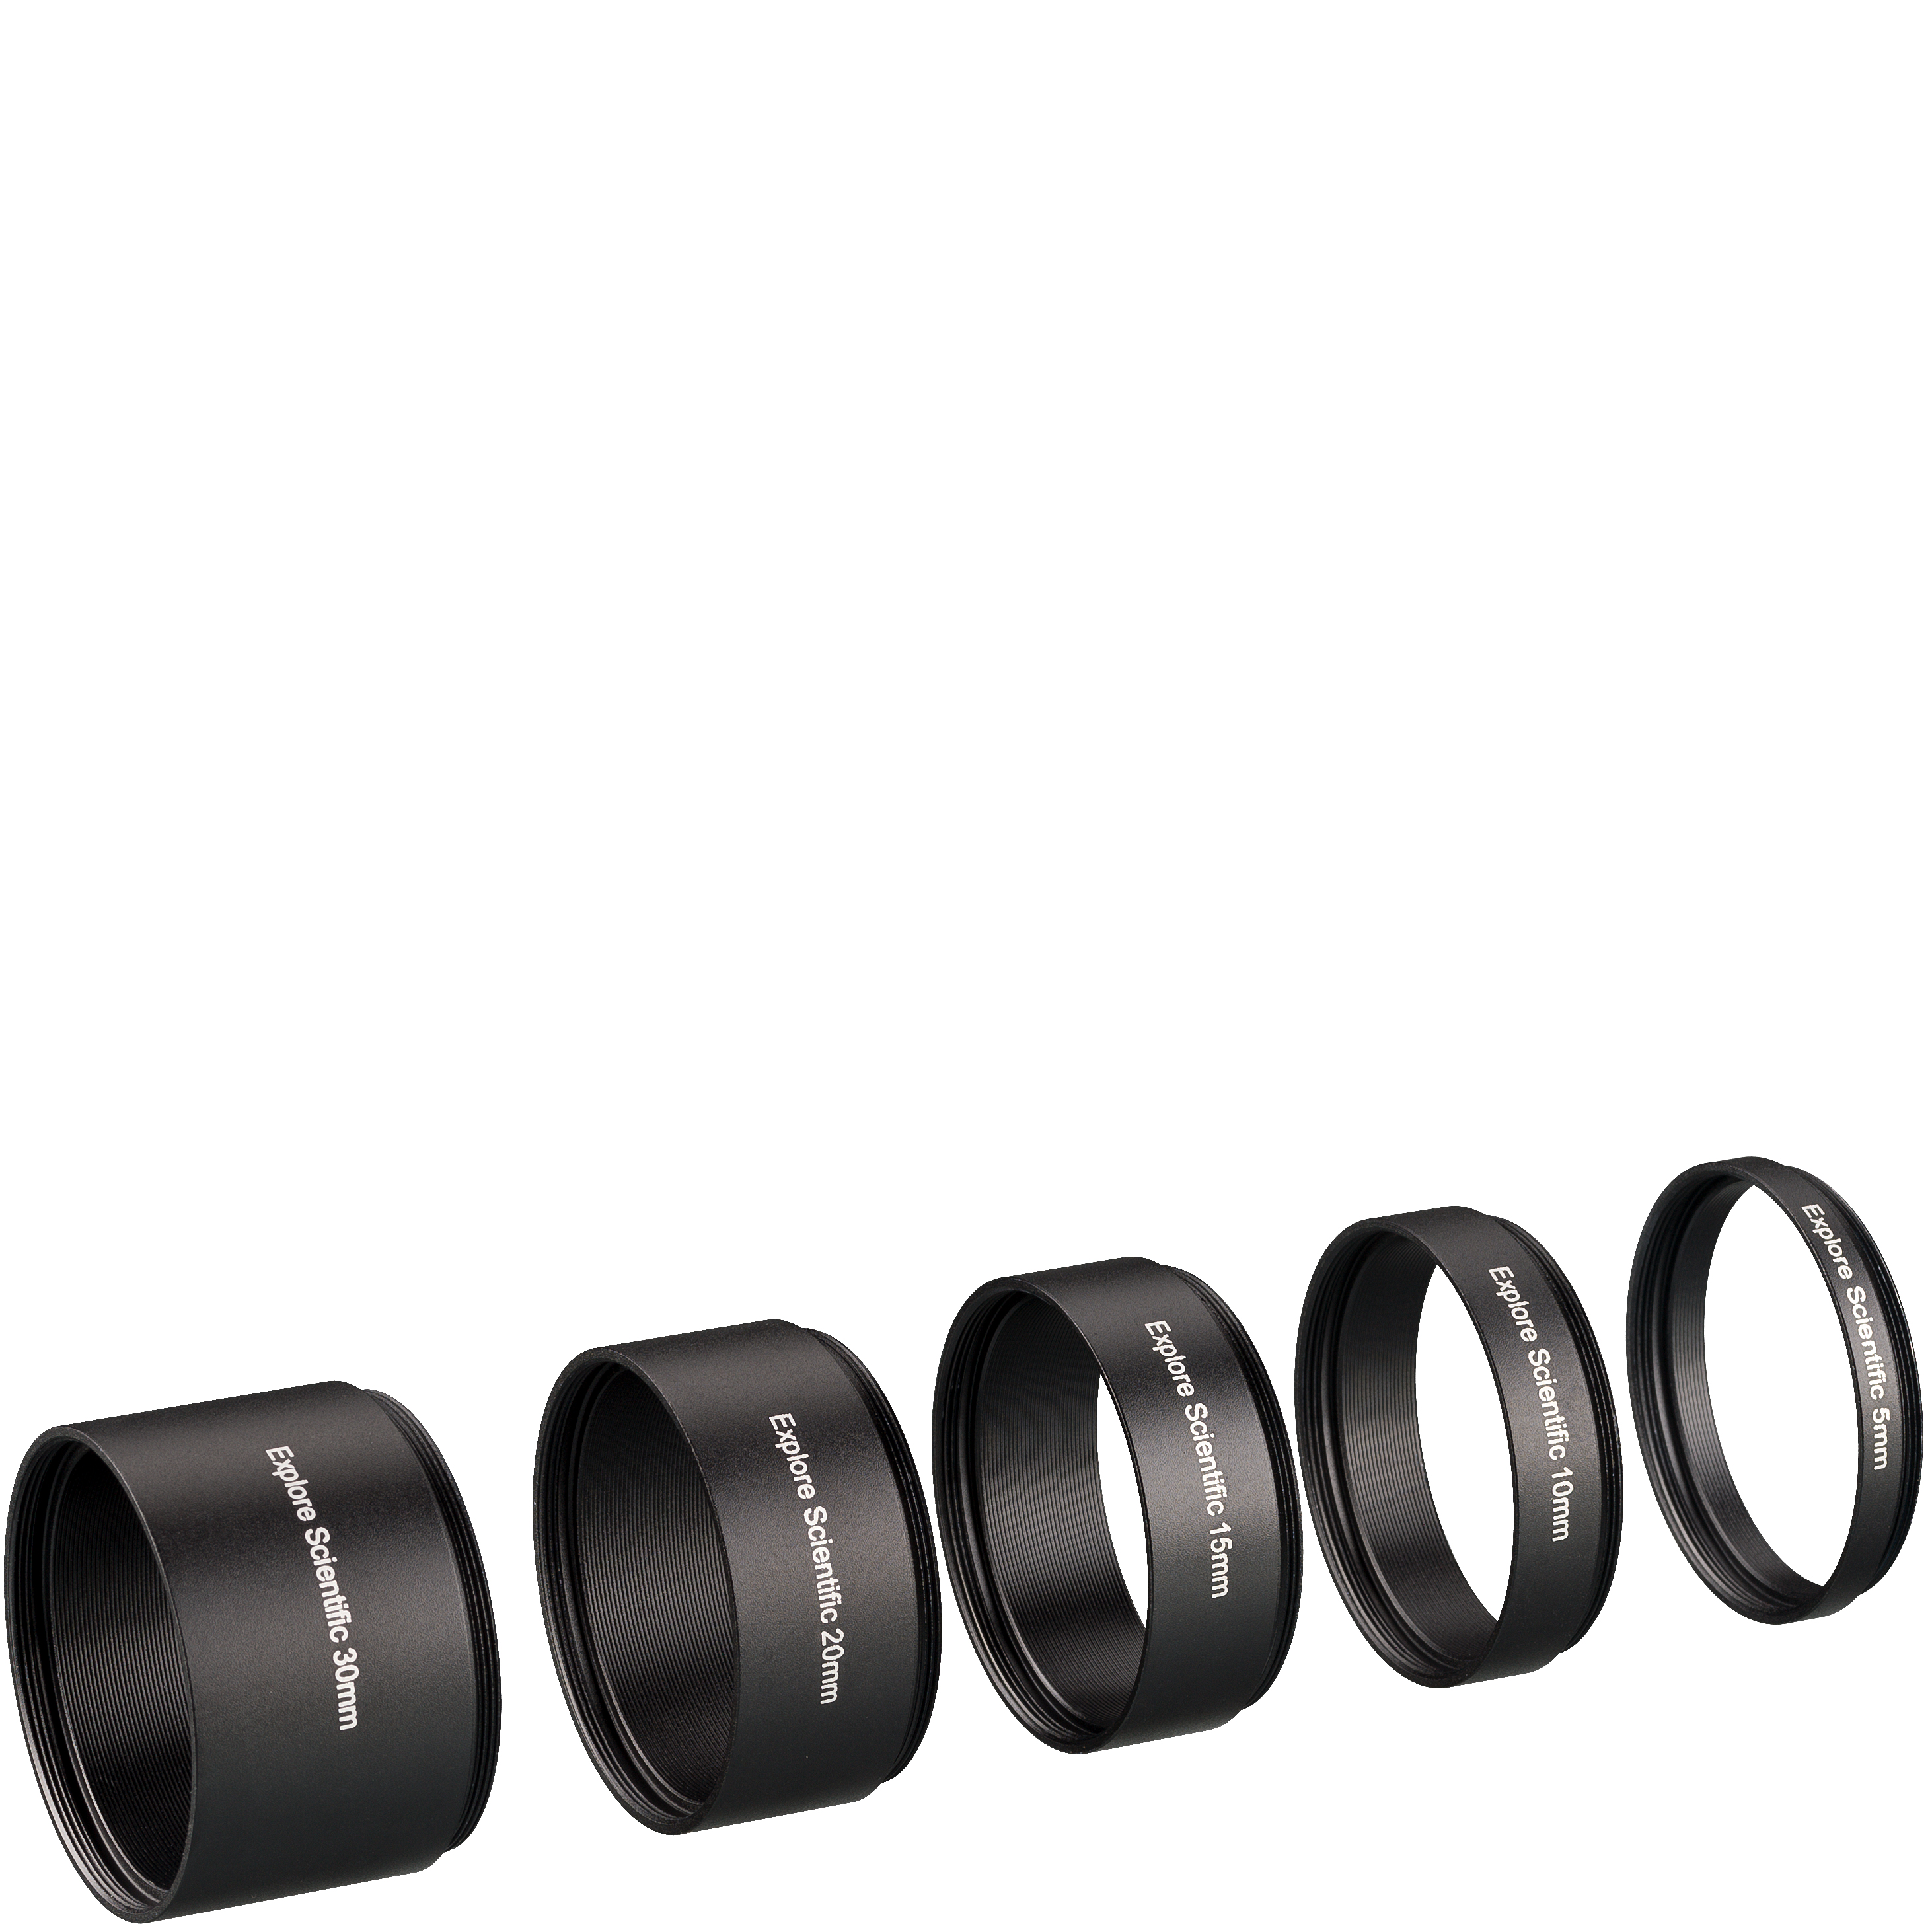 EXPLORE SCIENTIFIC Extension Ring Set M48x0.75 - 5 pieces (30, 20, 15, 10 and 5 mm)